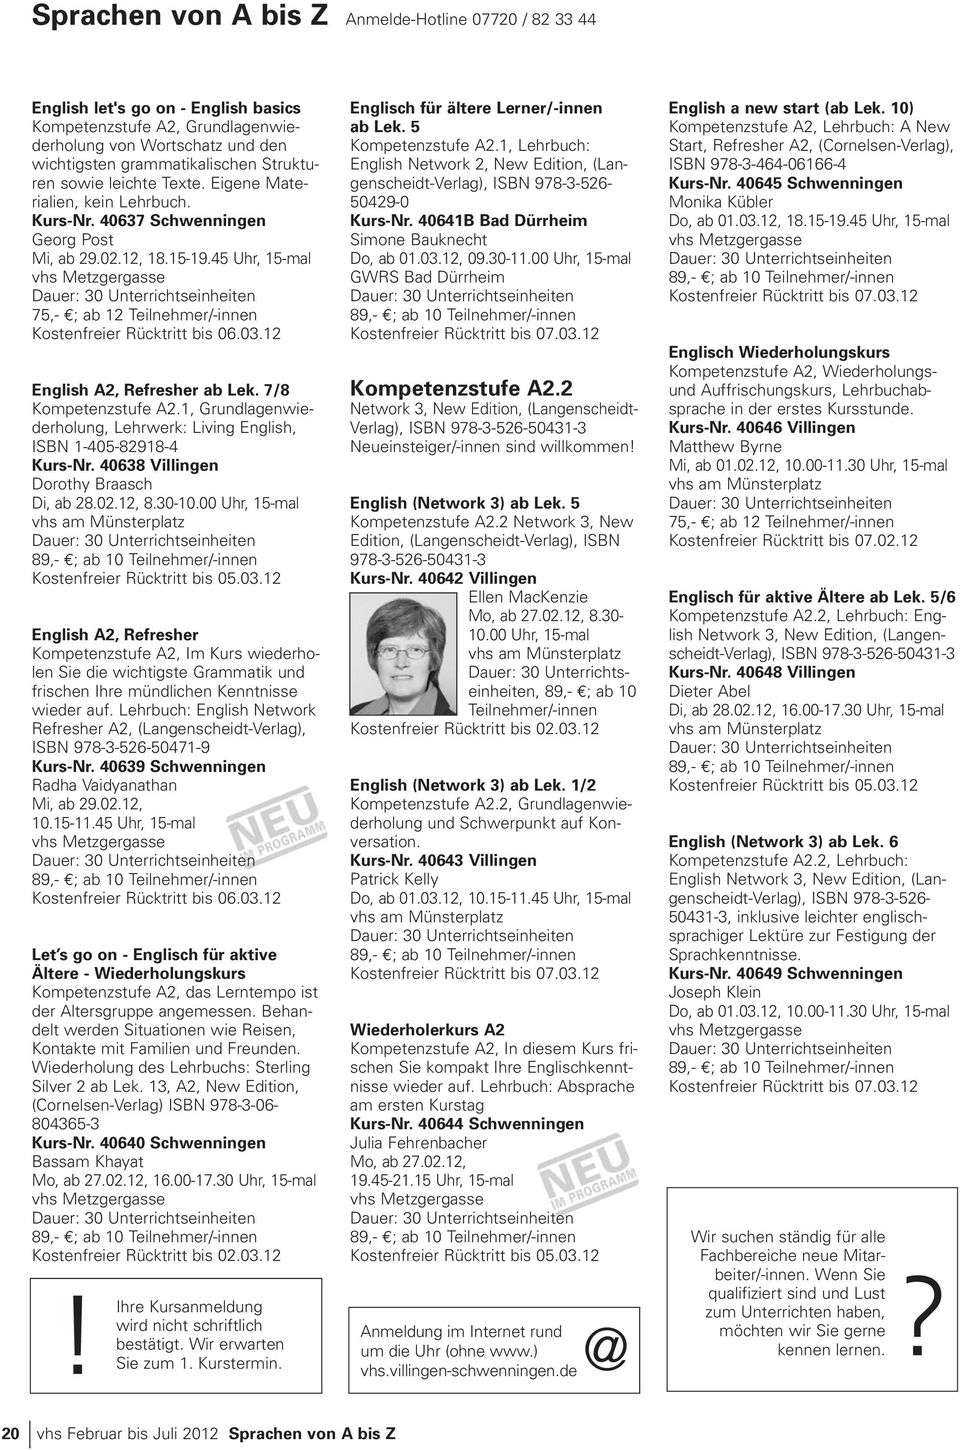 7/8 Kompetenzstufe A2.1, Grundlagenwiederholung, Lehrwerk: Living English, ISBN 1-405-82918-4 Kurs-Nr. 40638 Villingen Dorothy Braasch Di, ab 28.02.12, 8.30-10.